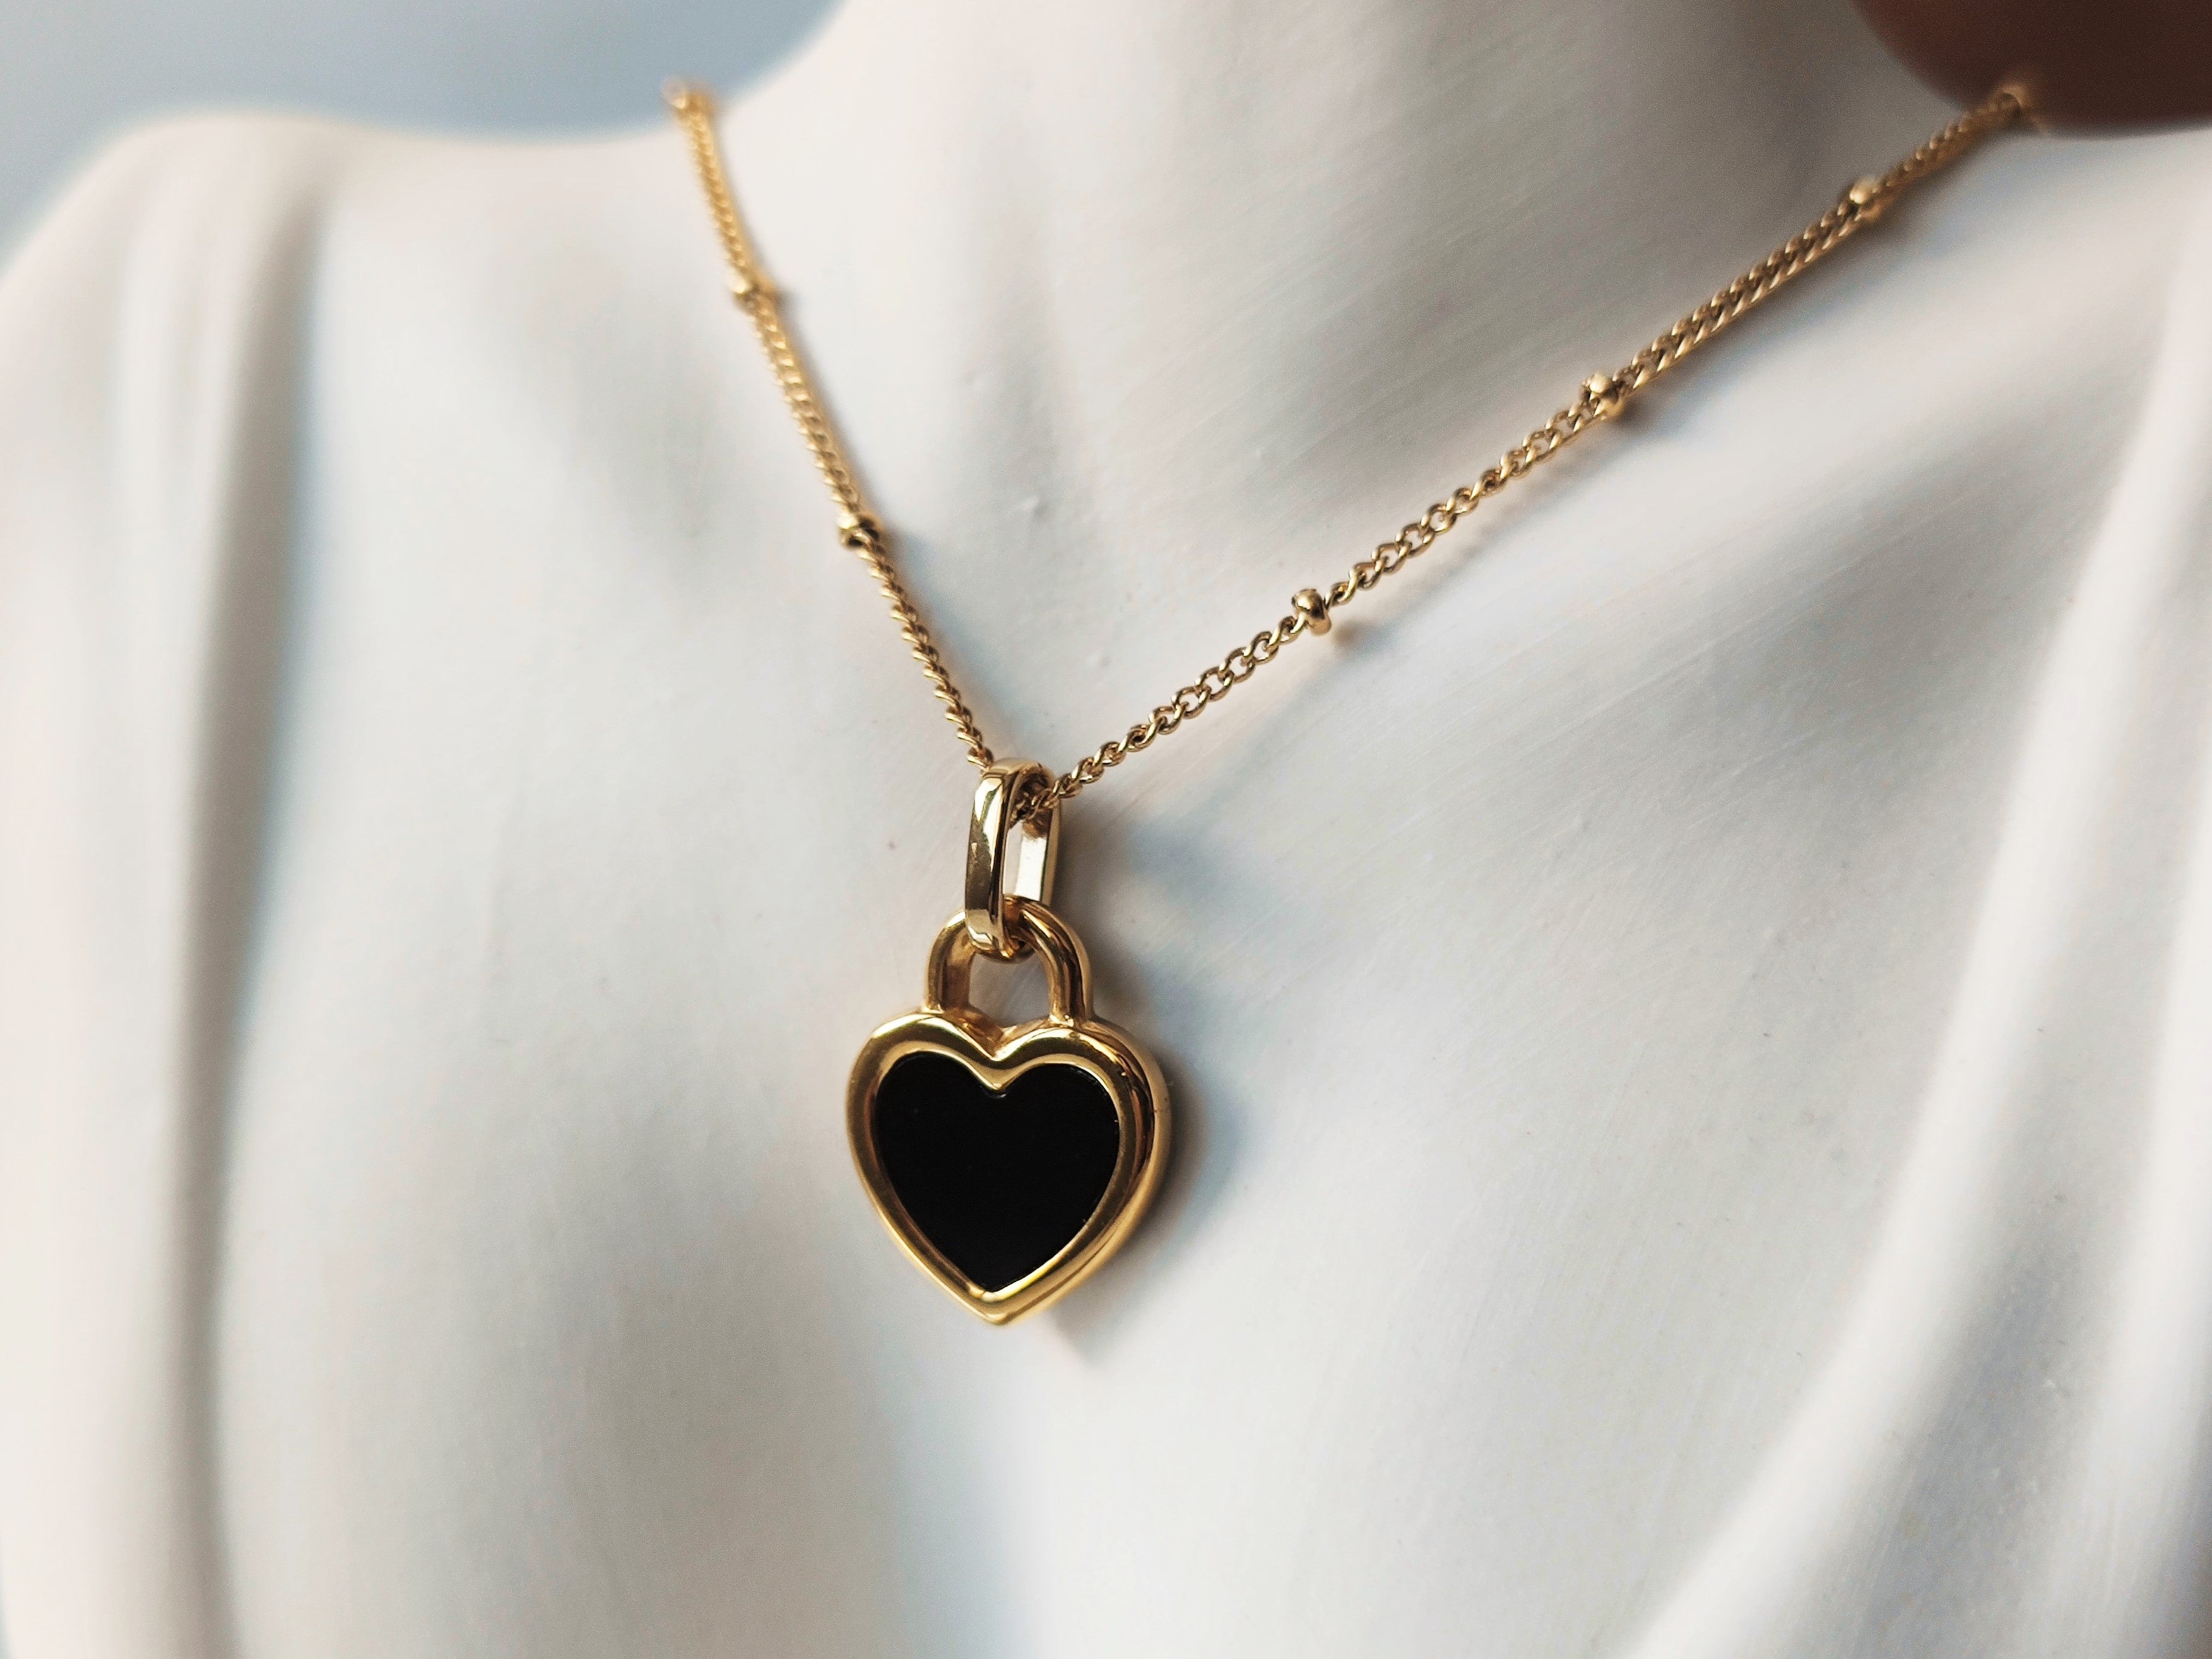 Kate's love nacre pendant necklace